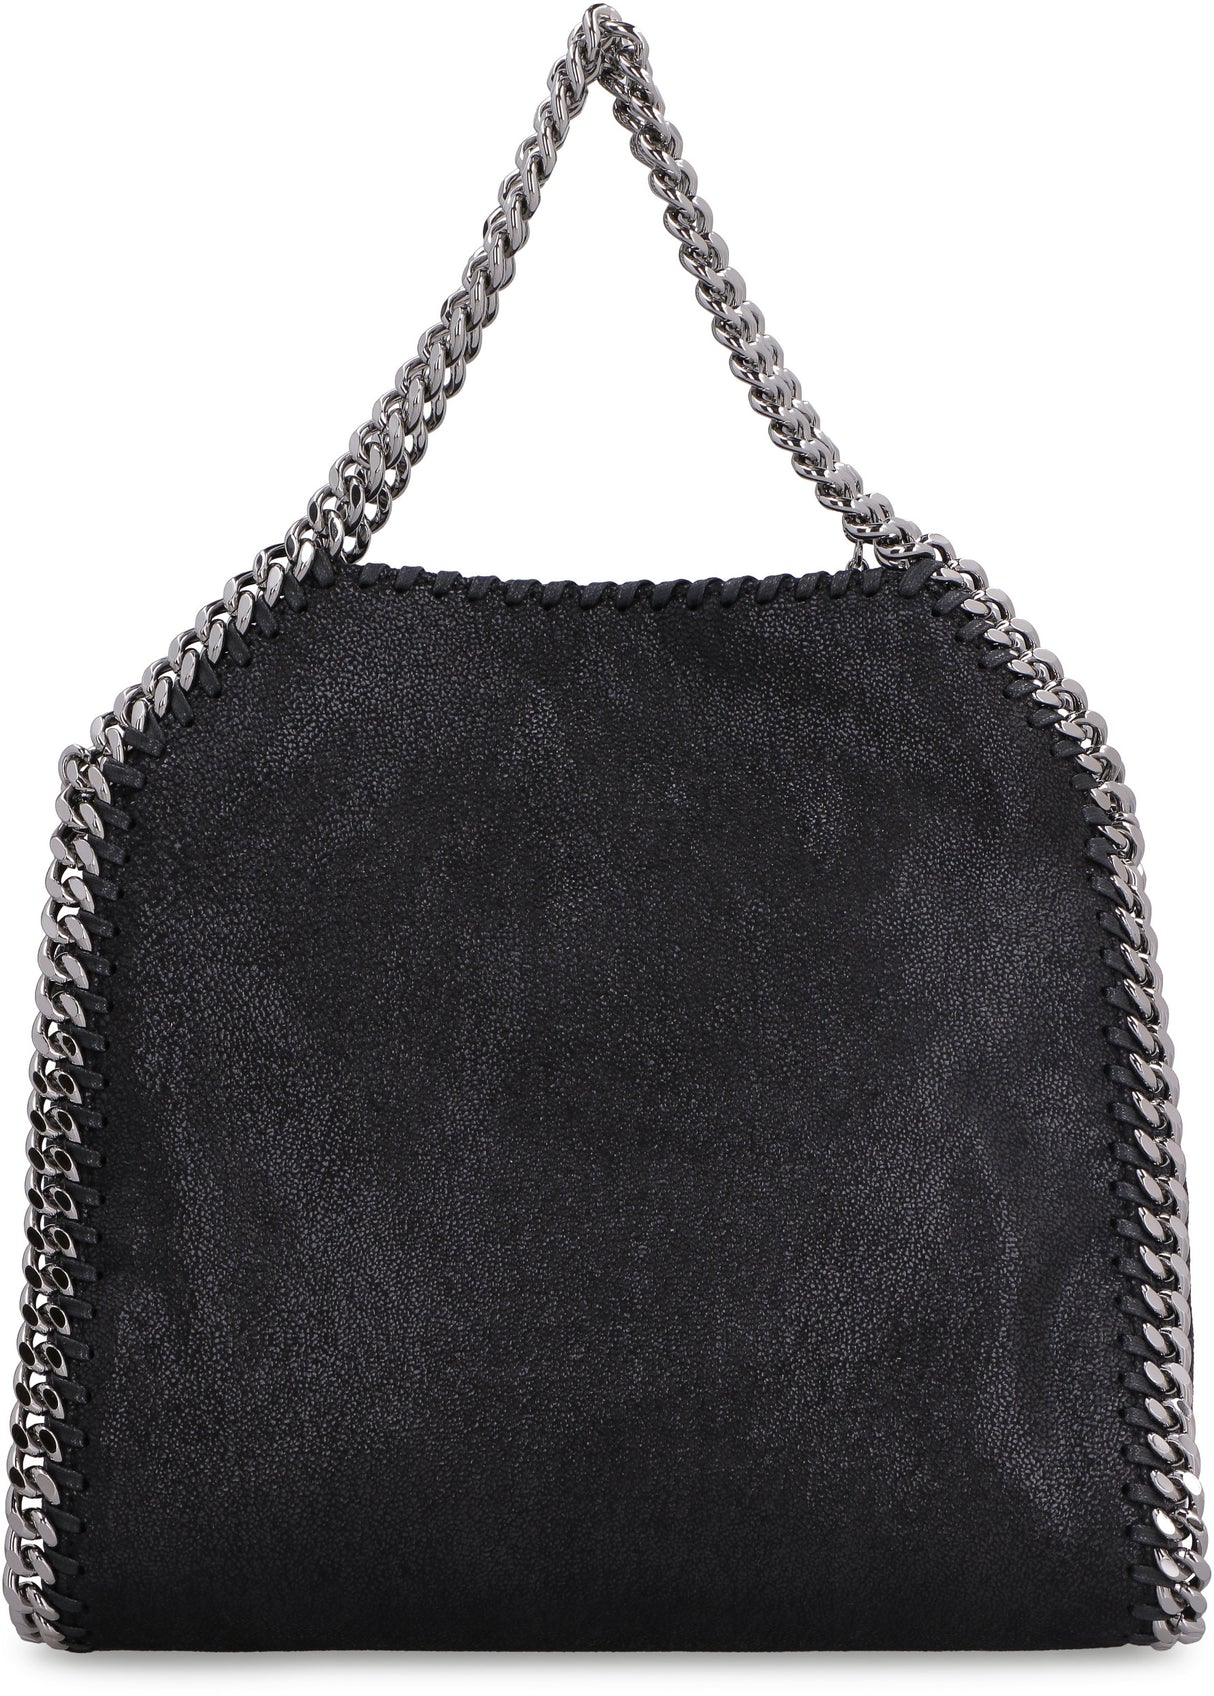 STELLA MCCARTNEY Mini Falabella Tote Handbag in Black with Silver-Tone Chain Detail and Convertible Strap